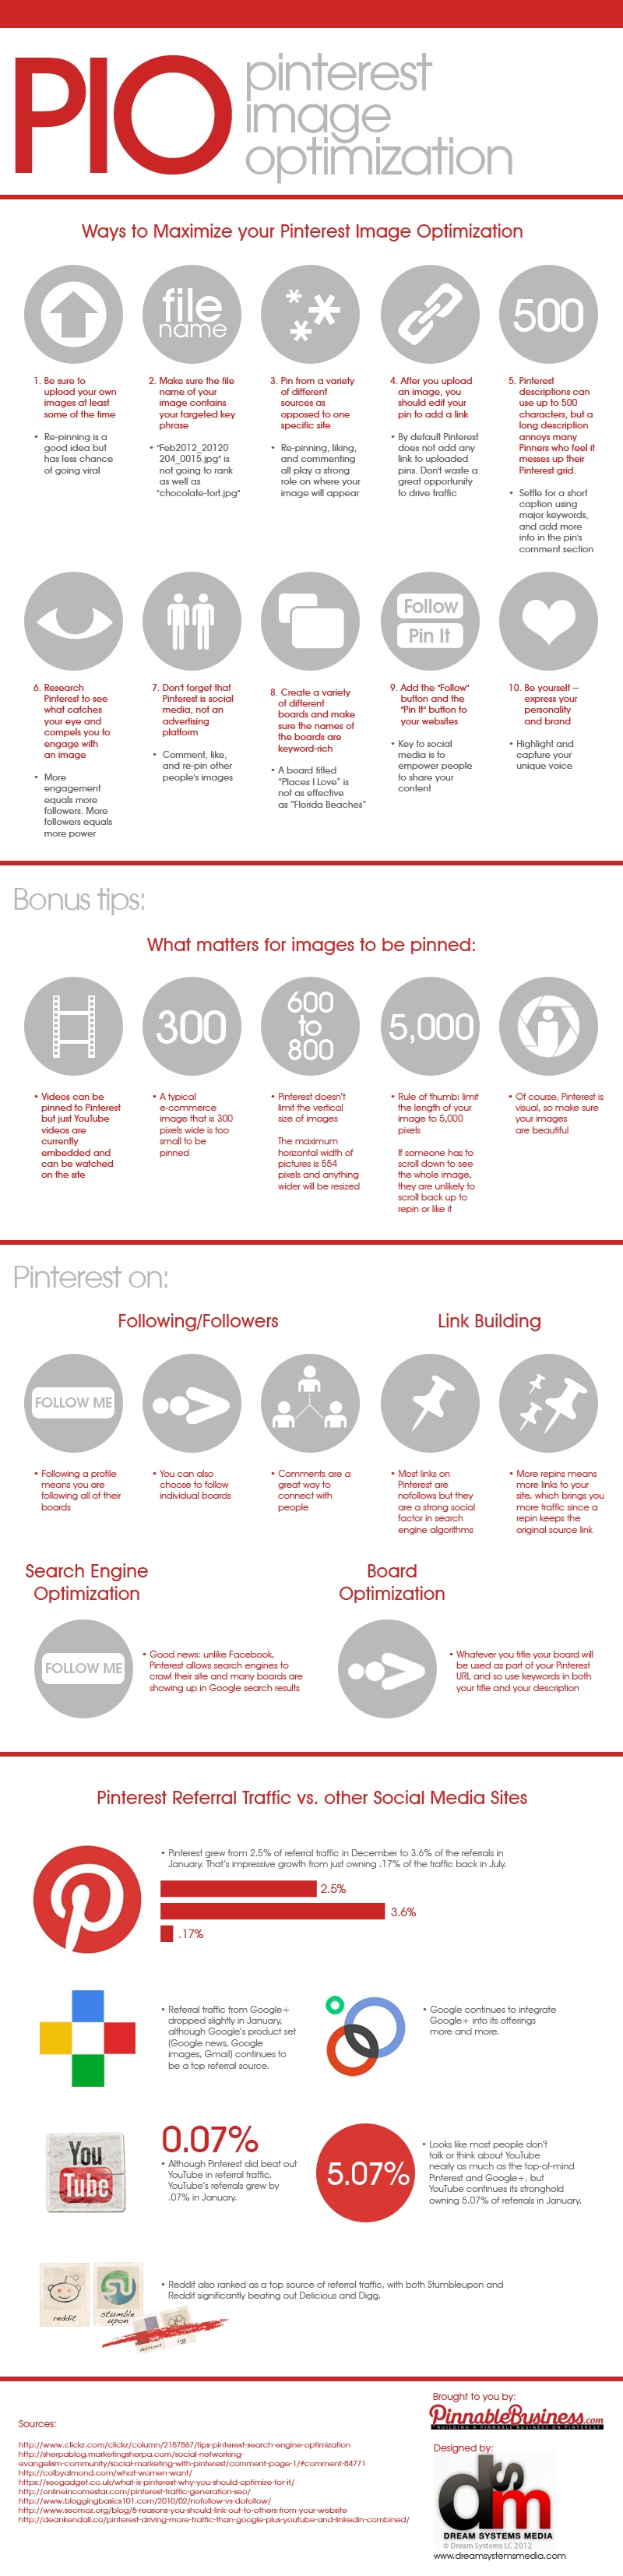 Pinterest Image Optimization Infographic